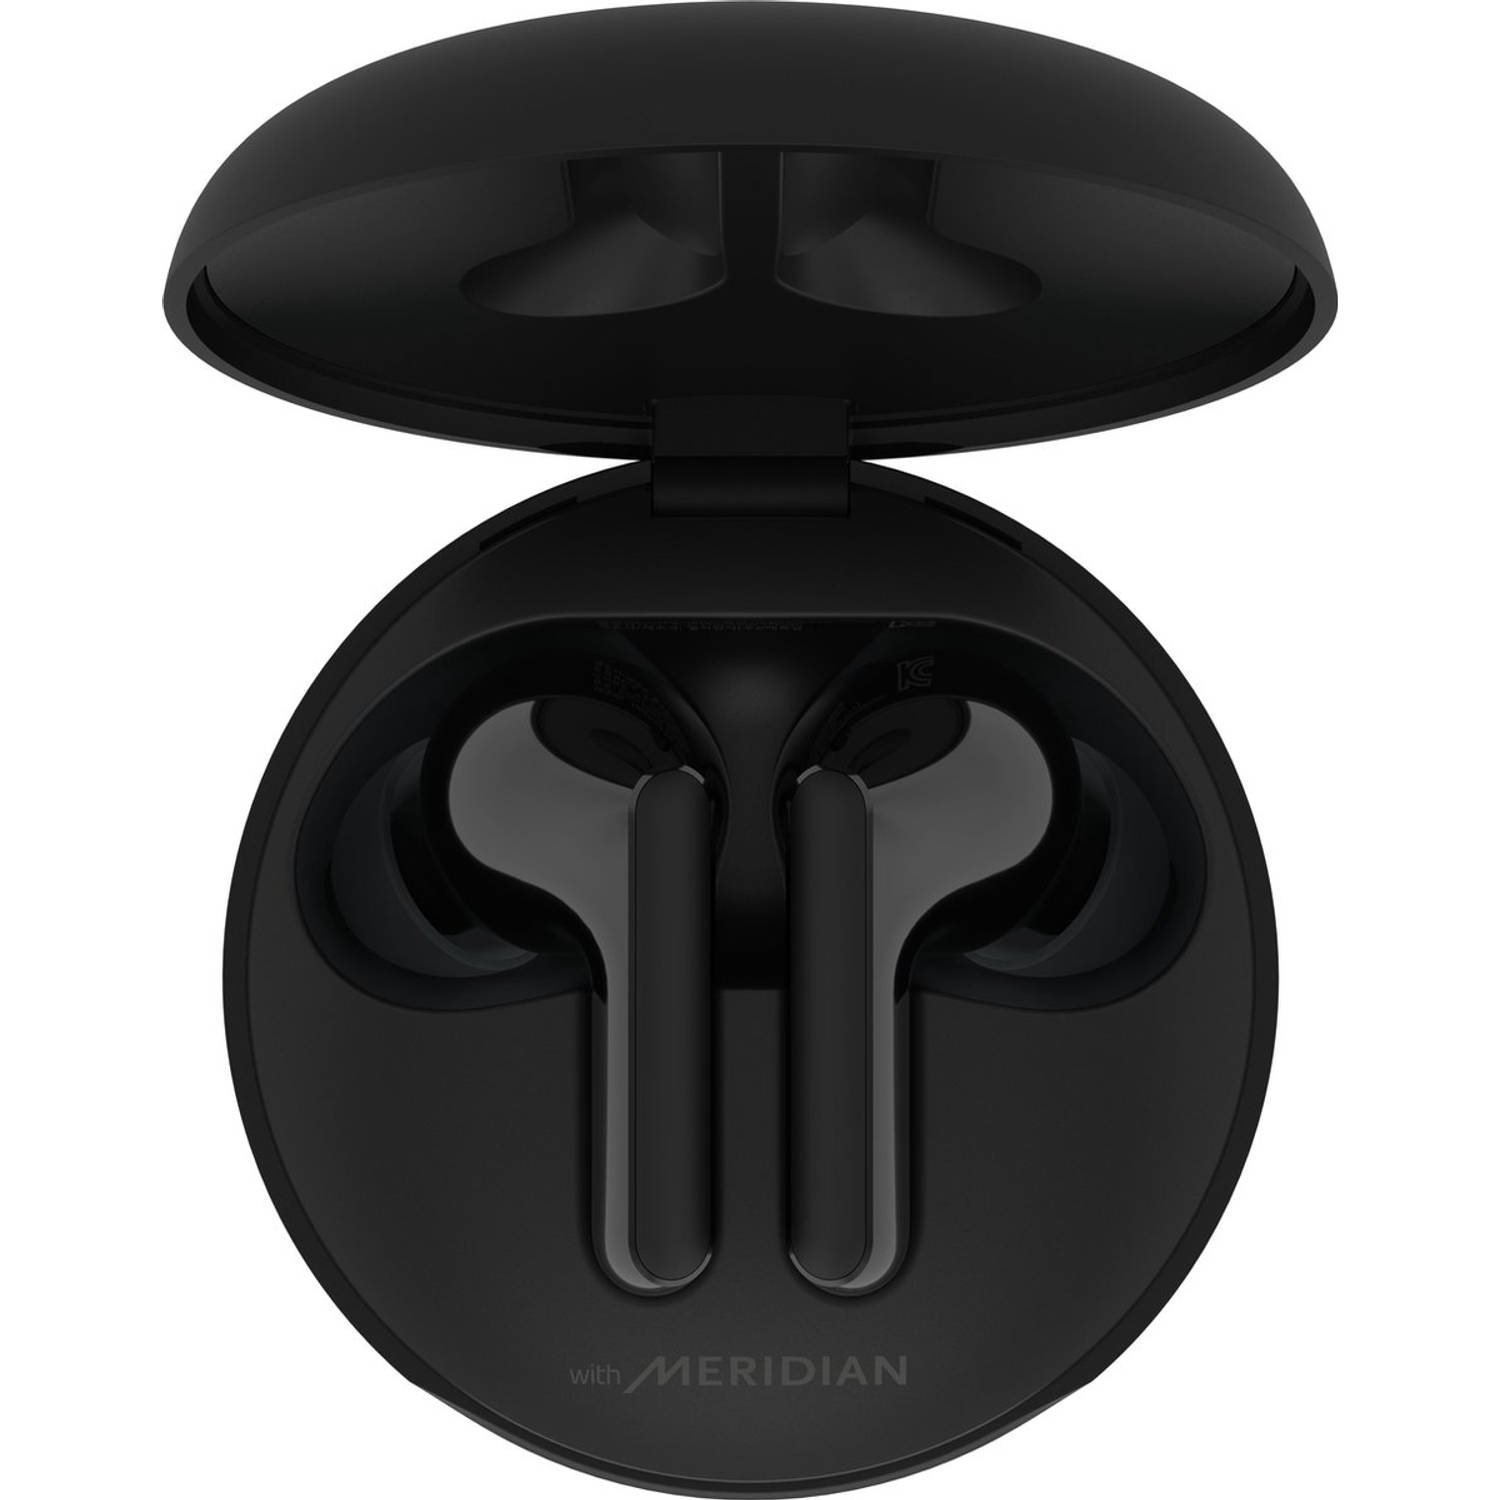 LG TONE Free FN4 - Volledig draadloze oordopjes - Bluetooth - Zwart